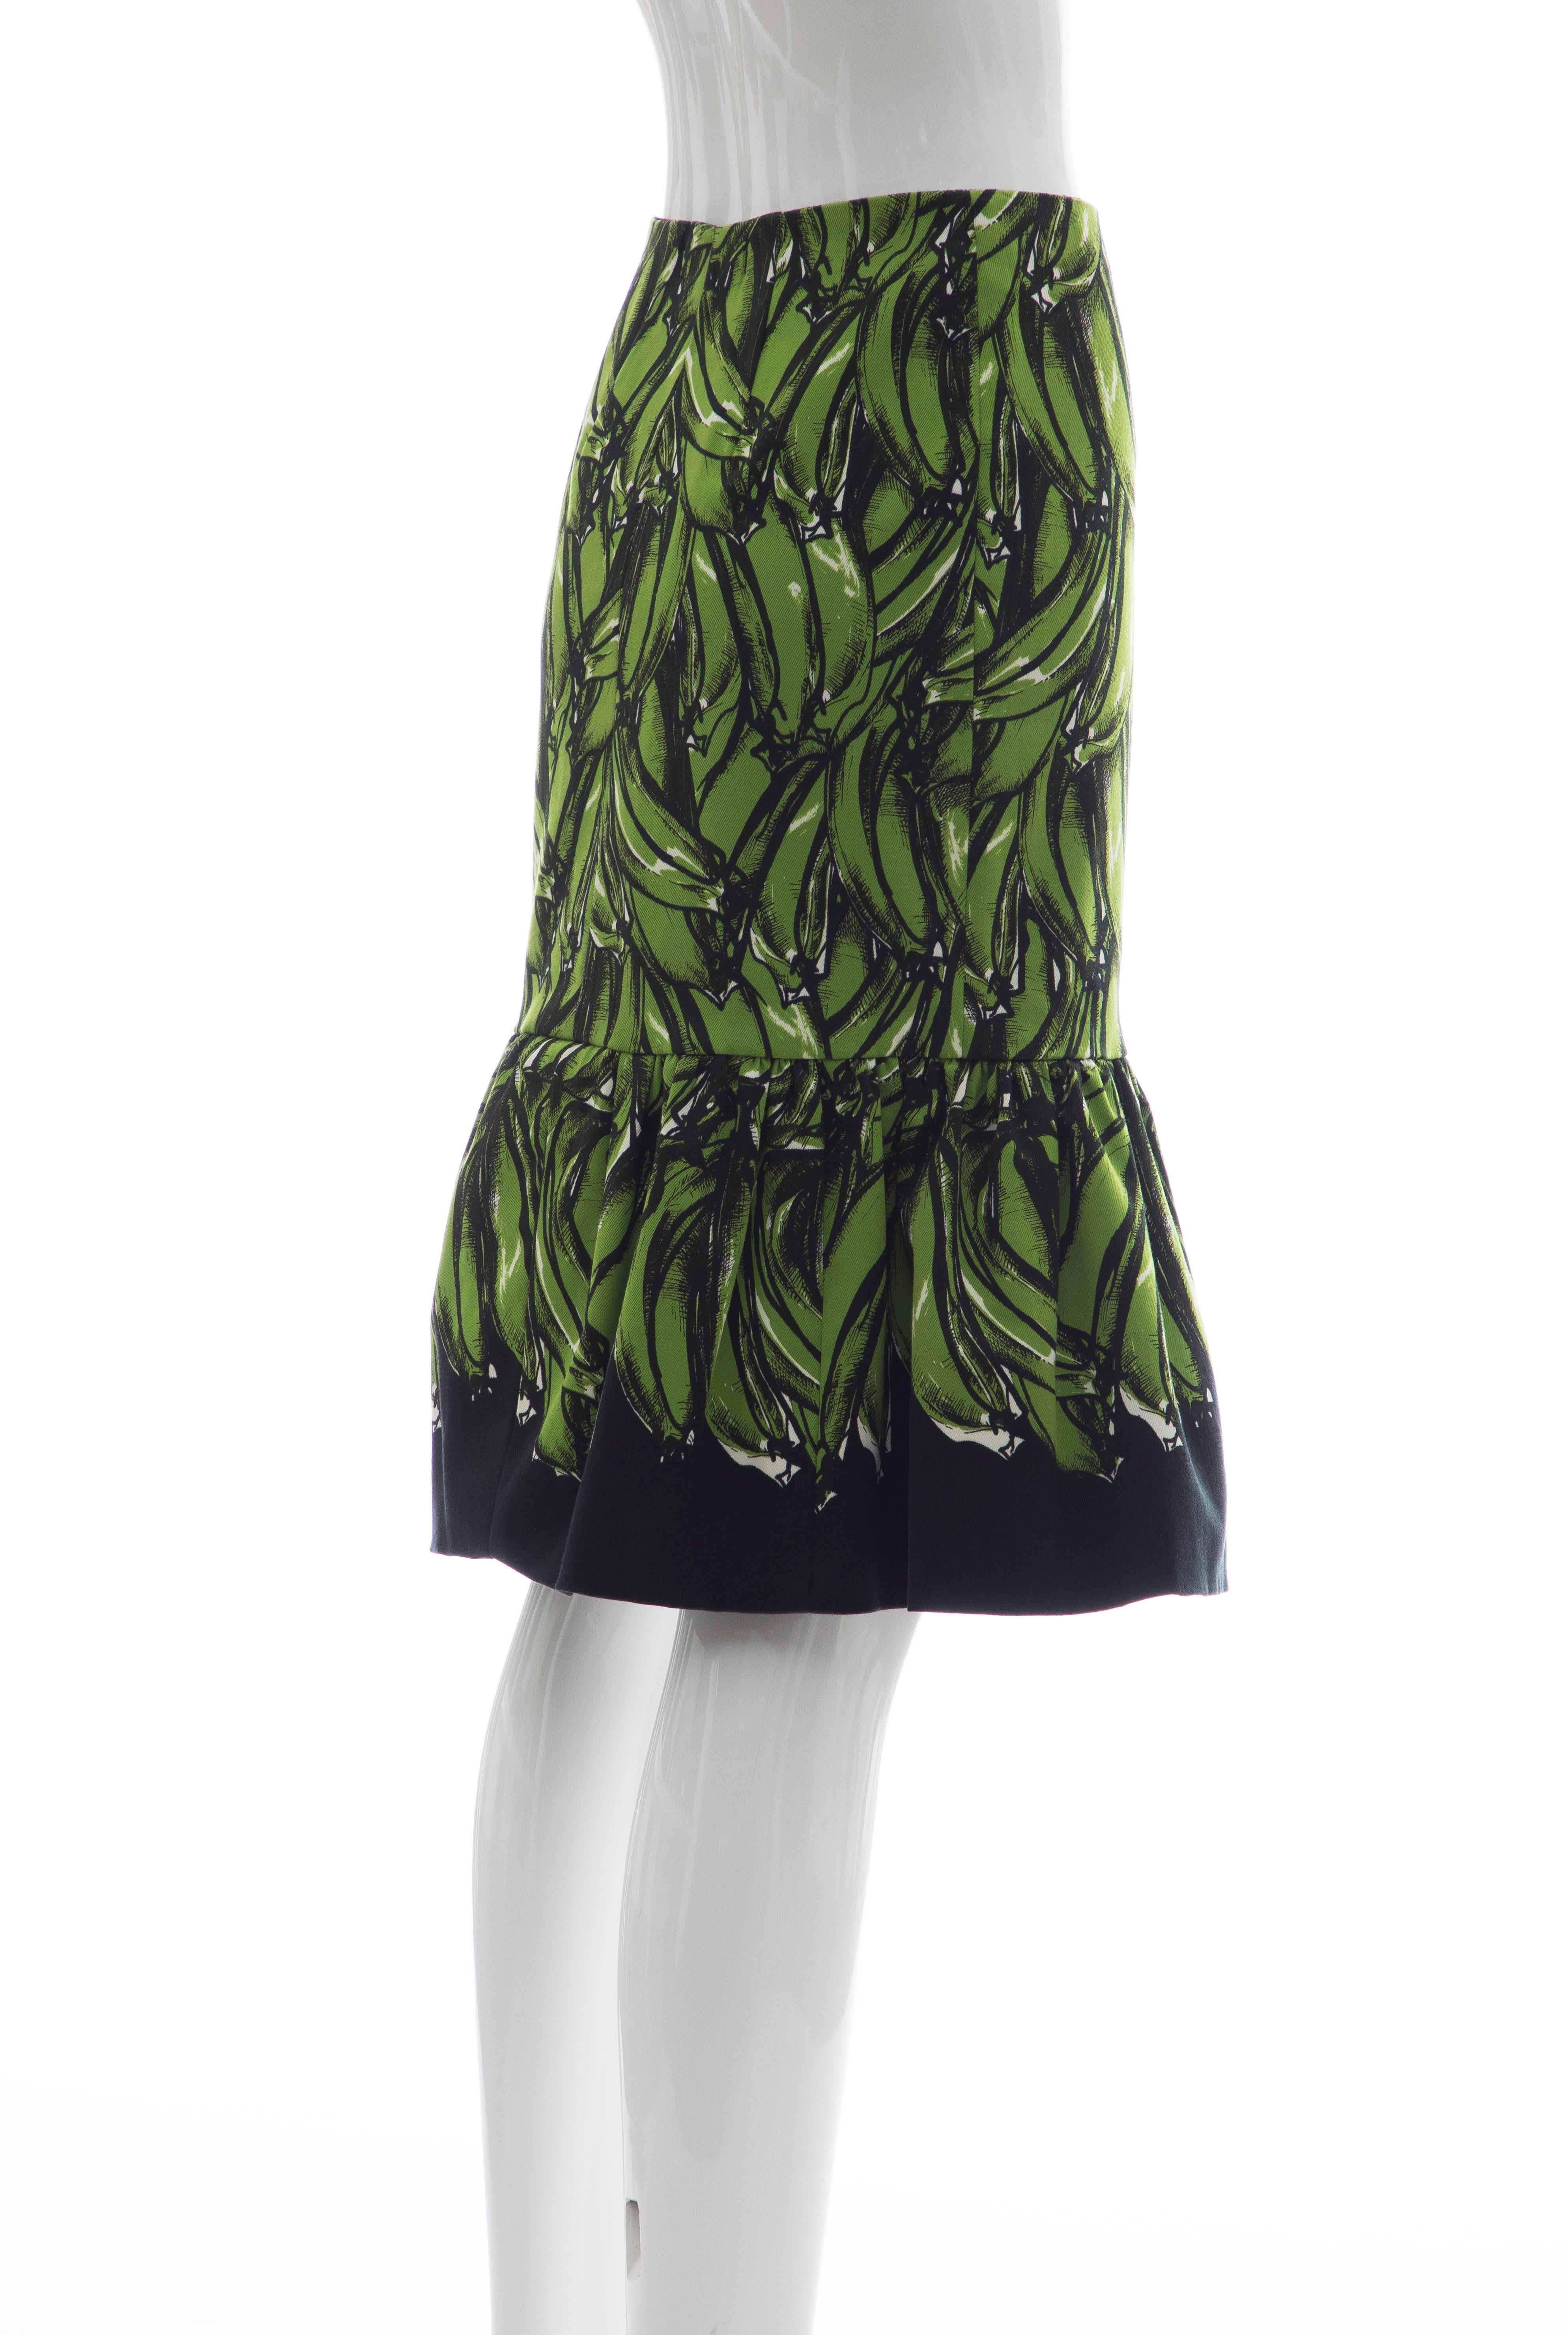 Women's Prada Black Cotton With Green Plantains Print Skirt, Spring - Summer 2011